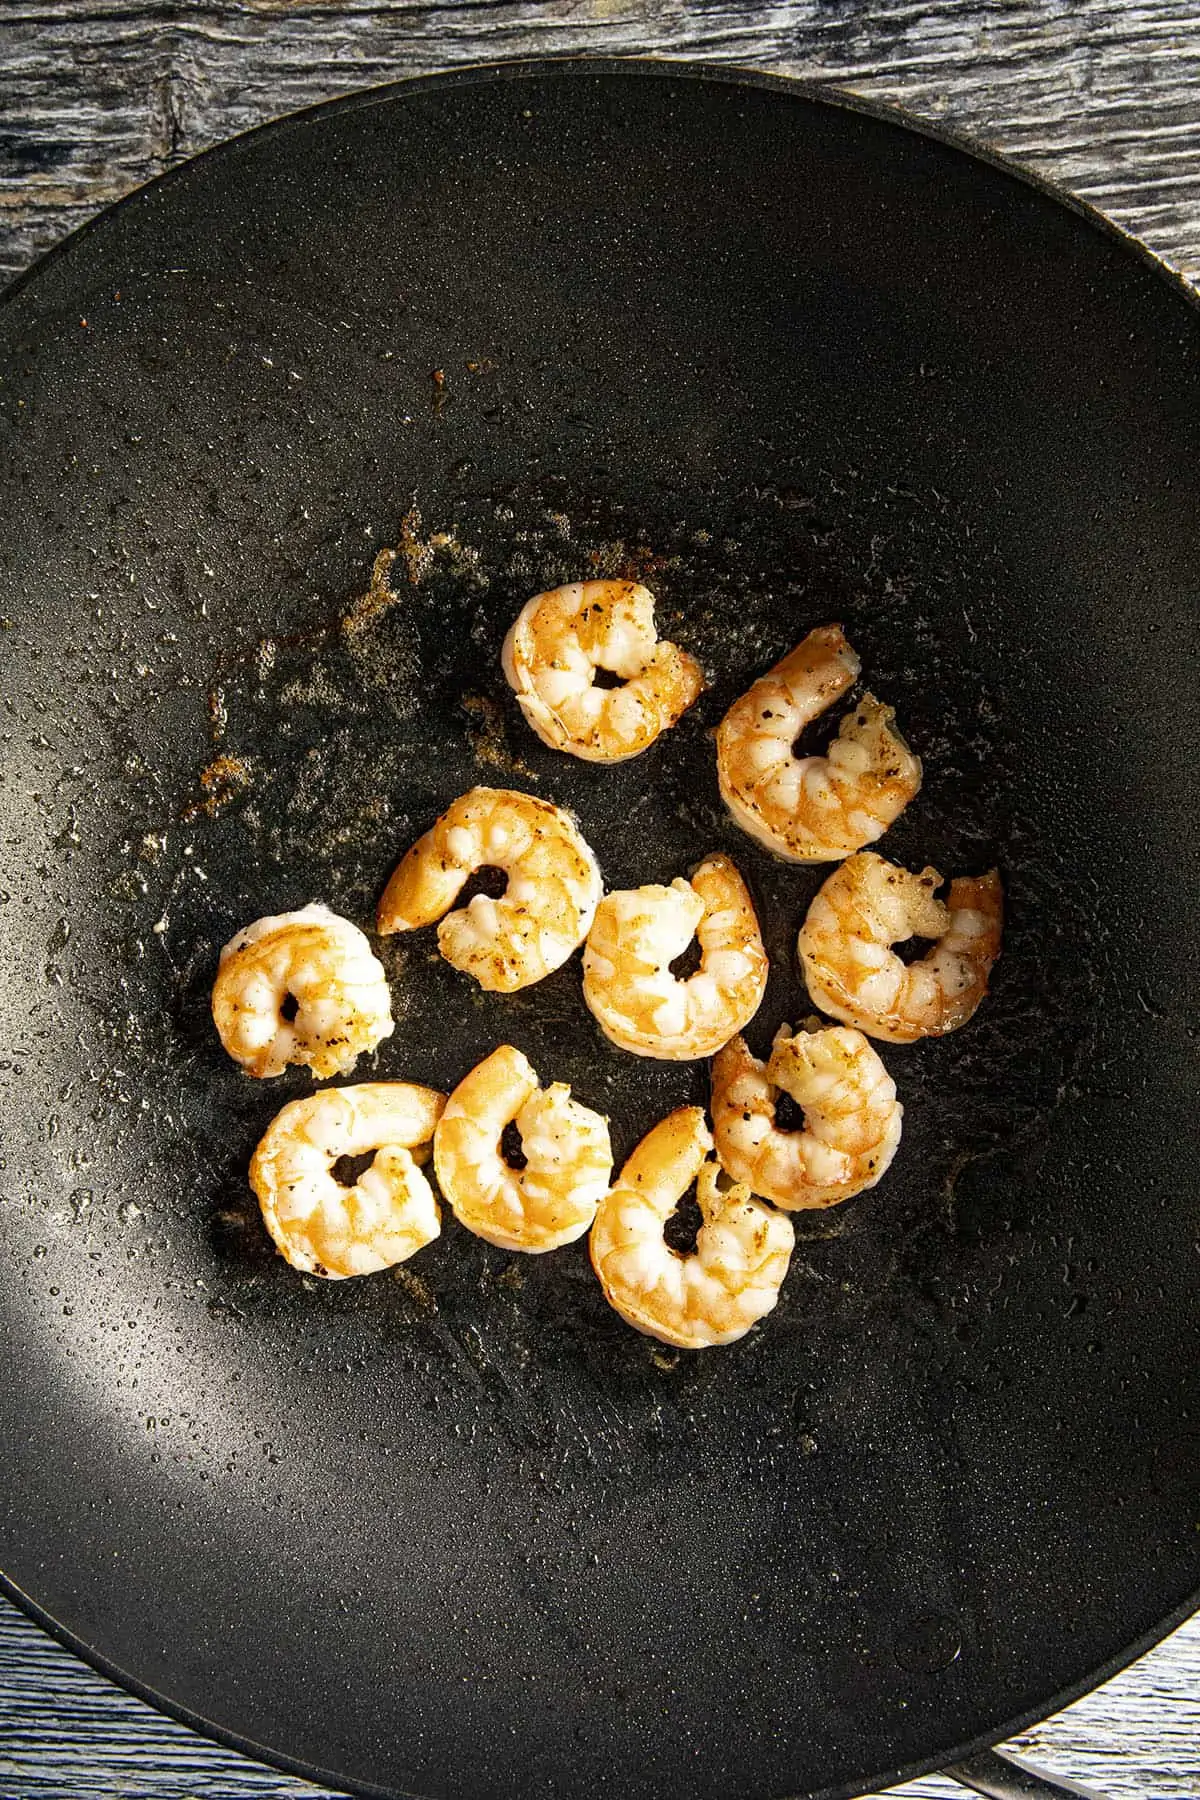 Cooking the shrimp in a pan to make Teriyaki Shrimp Stir Fry